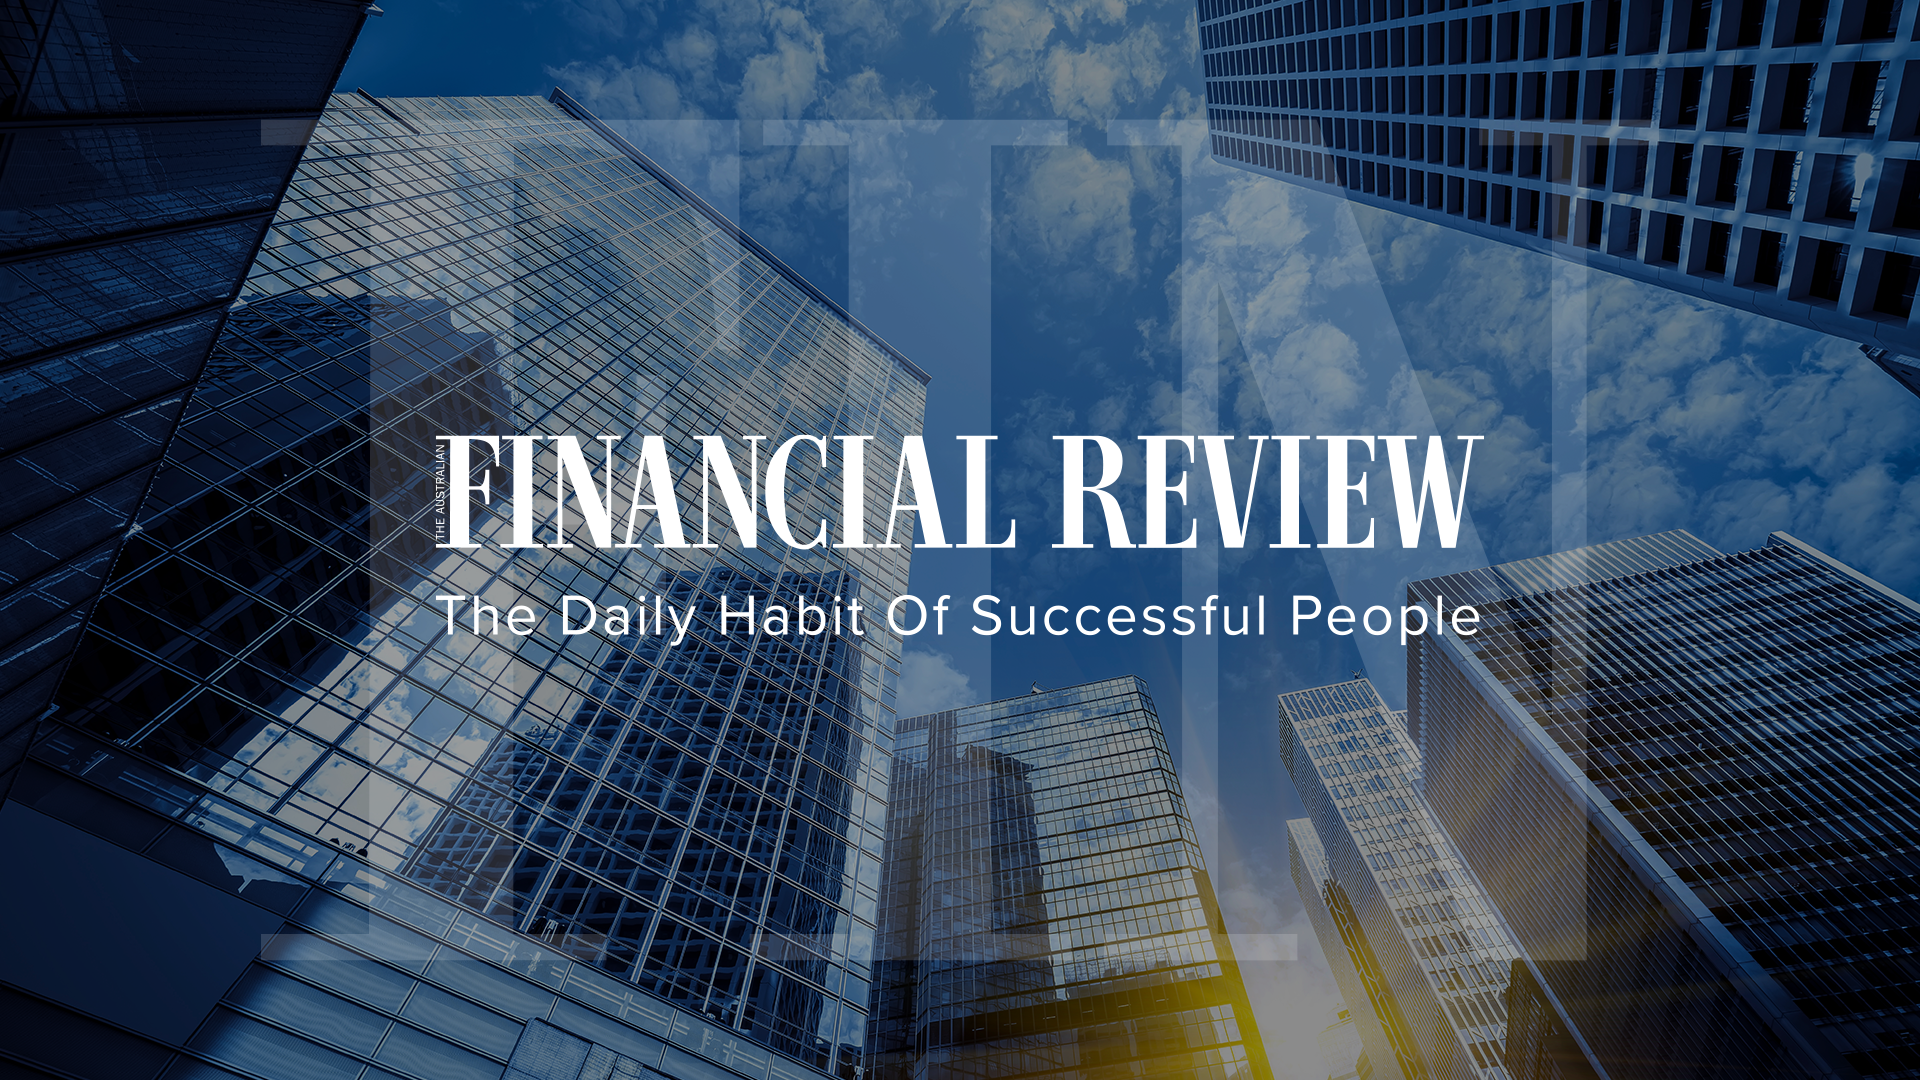 The Financial Review remains Australia's most read premium business title